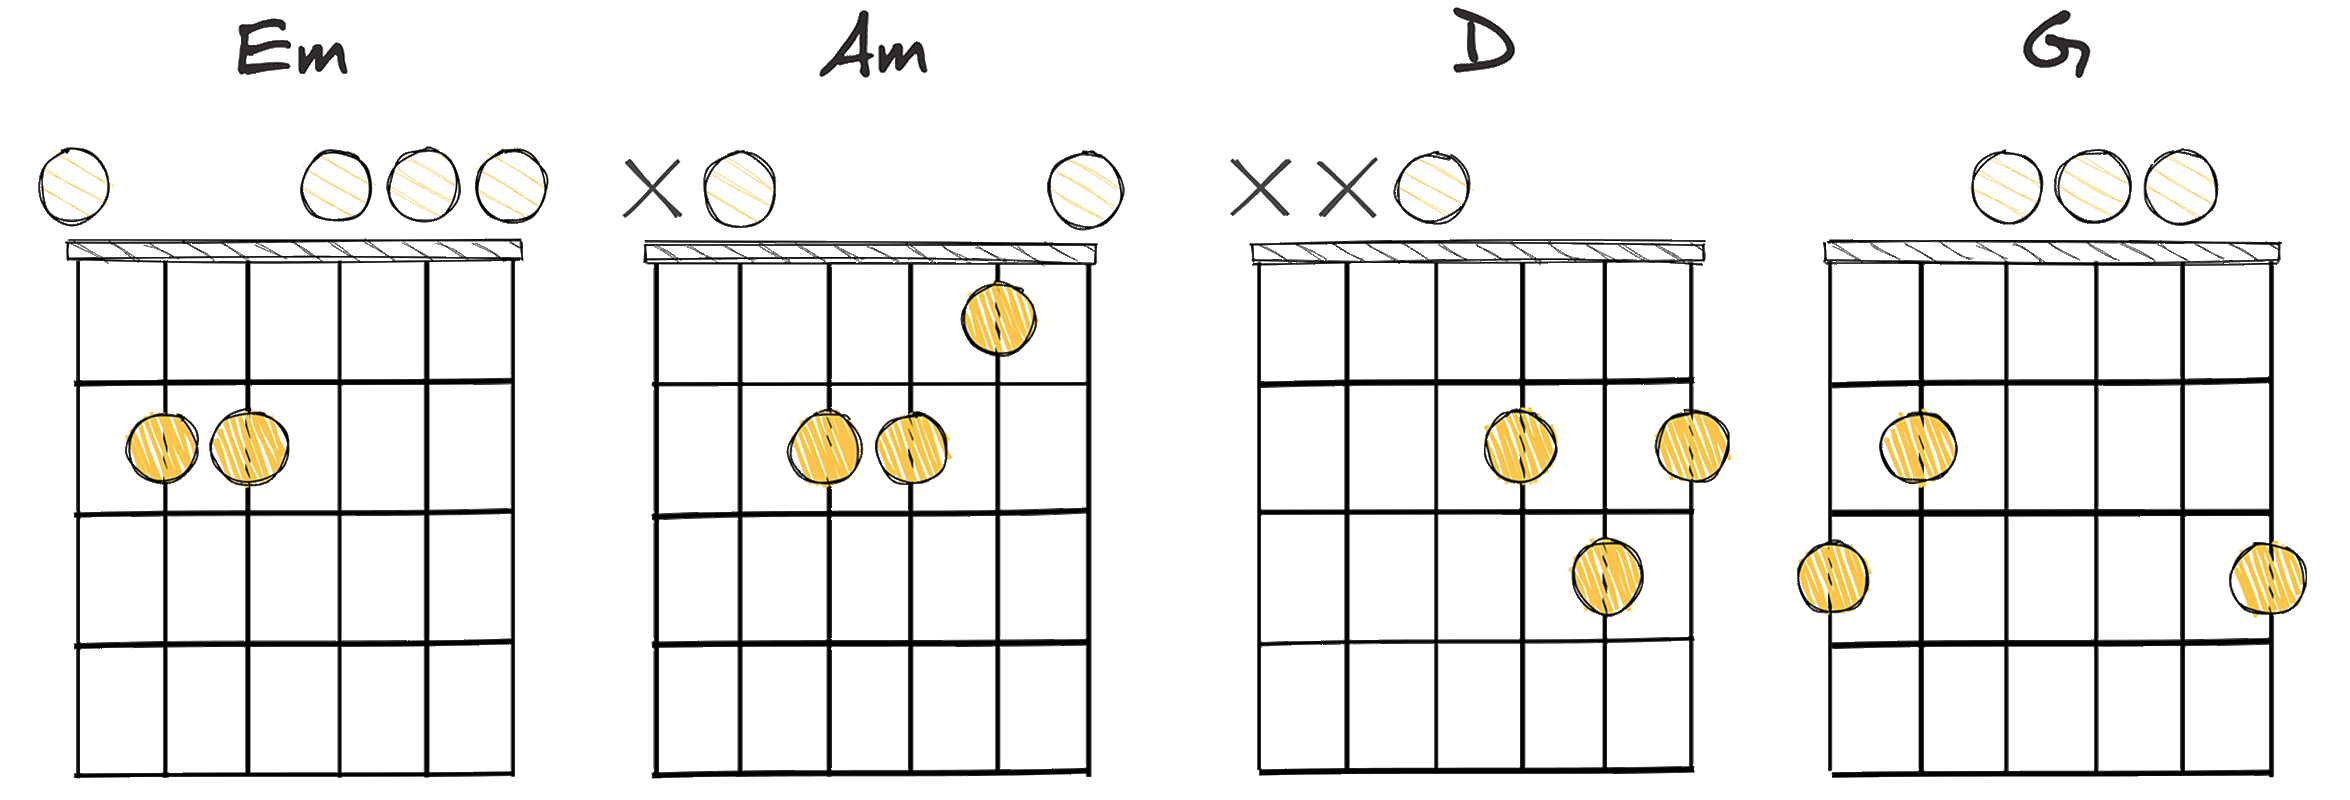 iii-vi-II-V (3-6-2-5) chords diagram